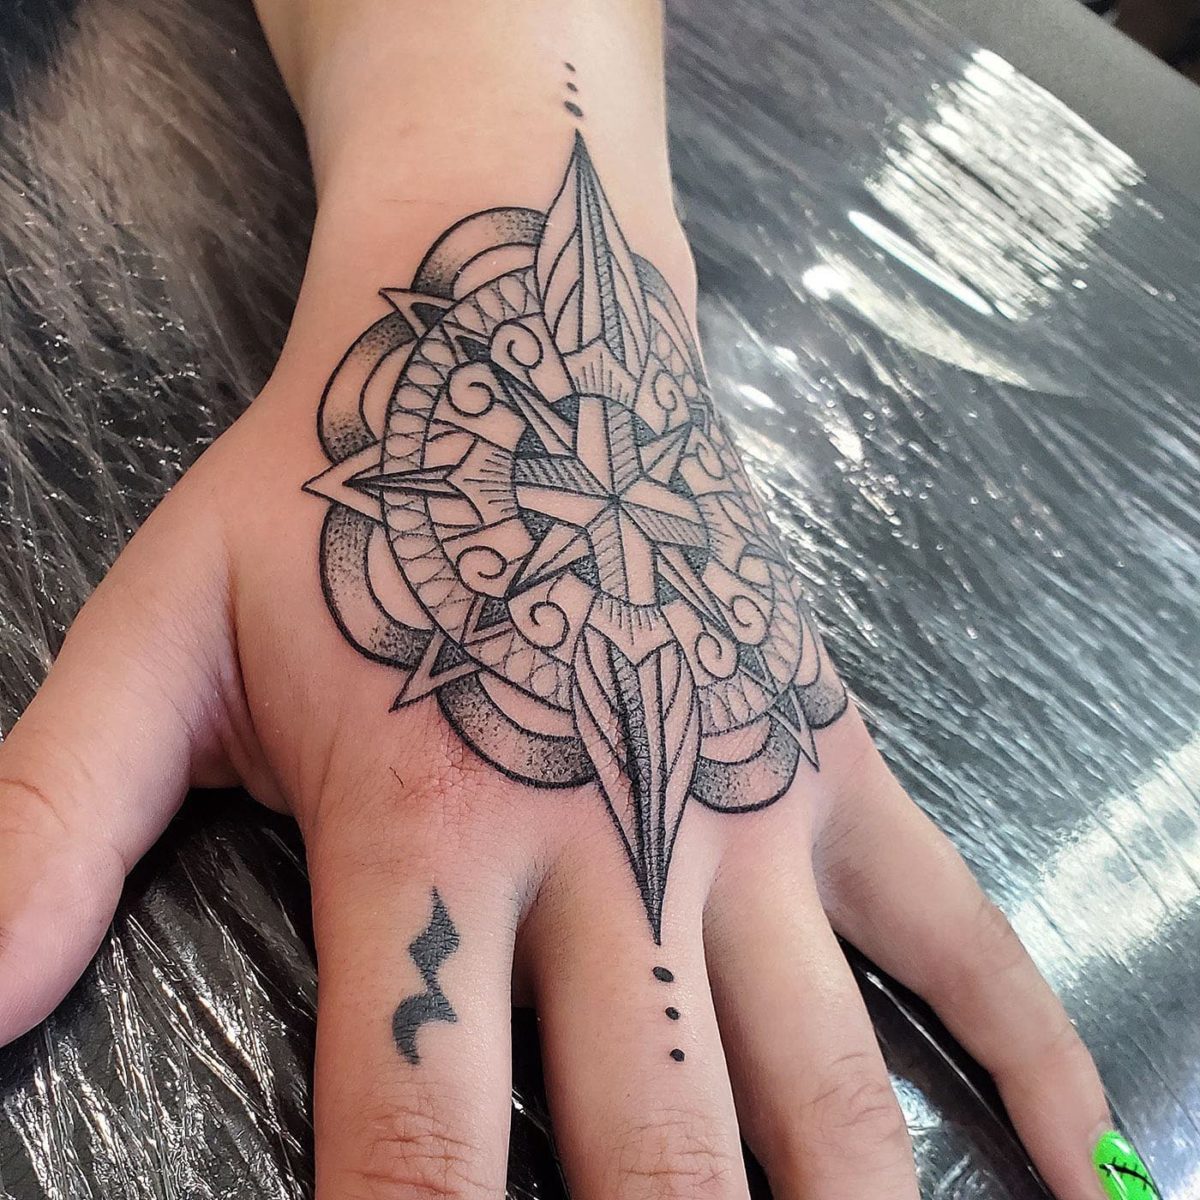 lewis hamilton's new hand tattoos 